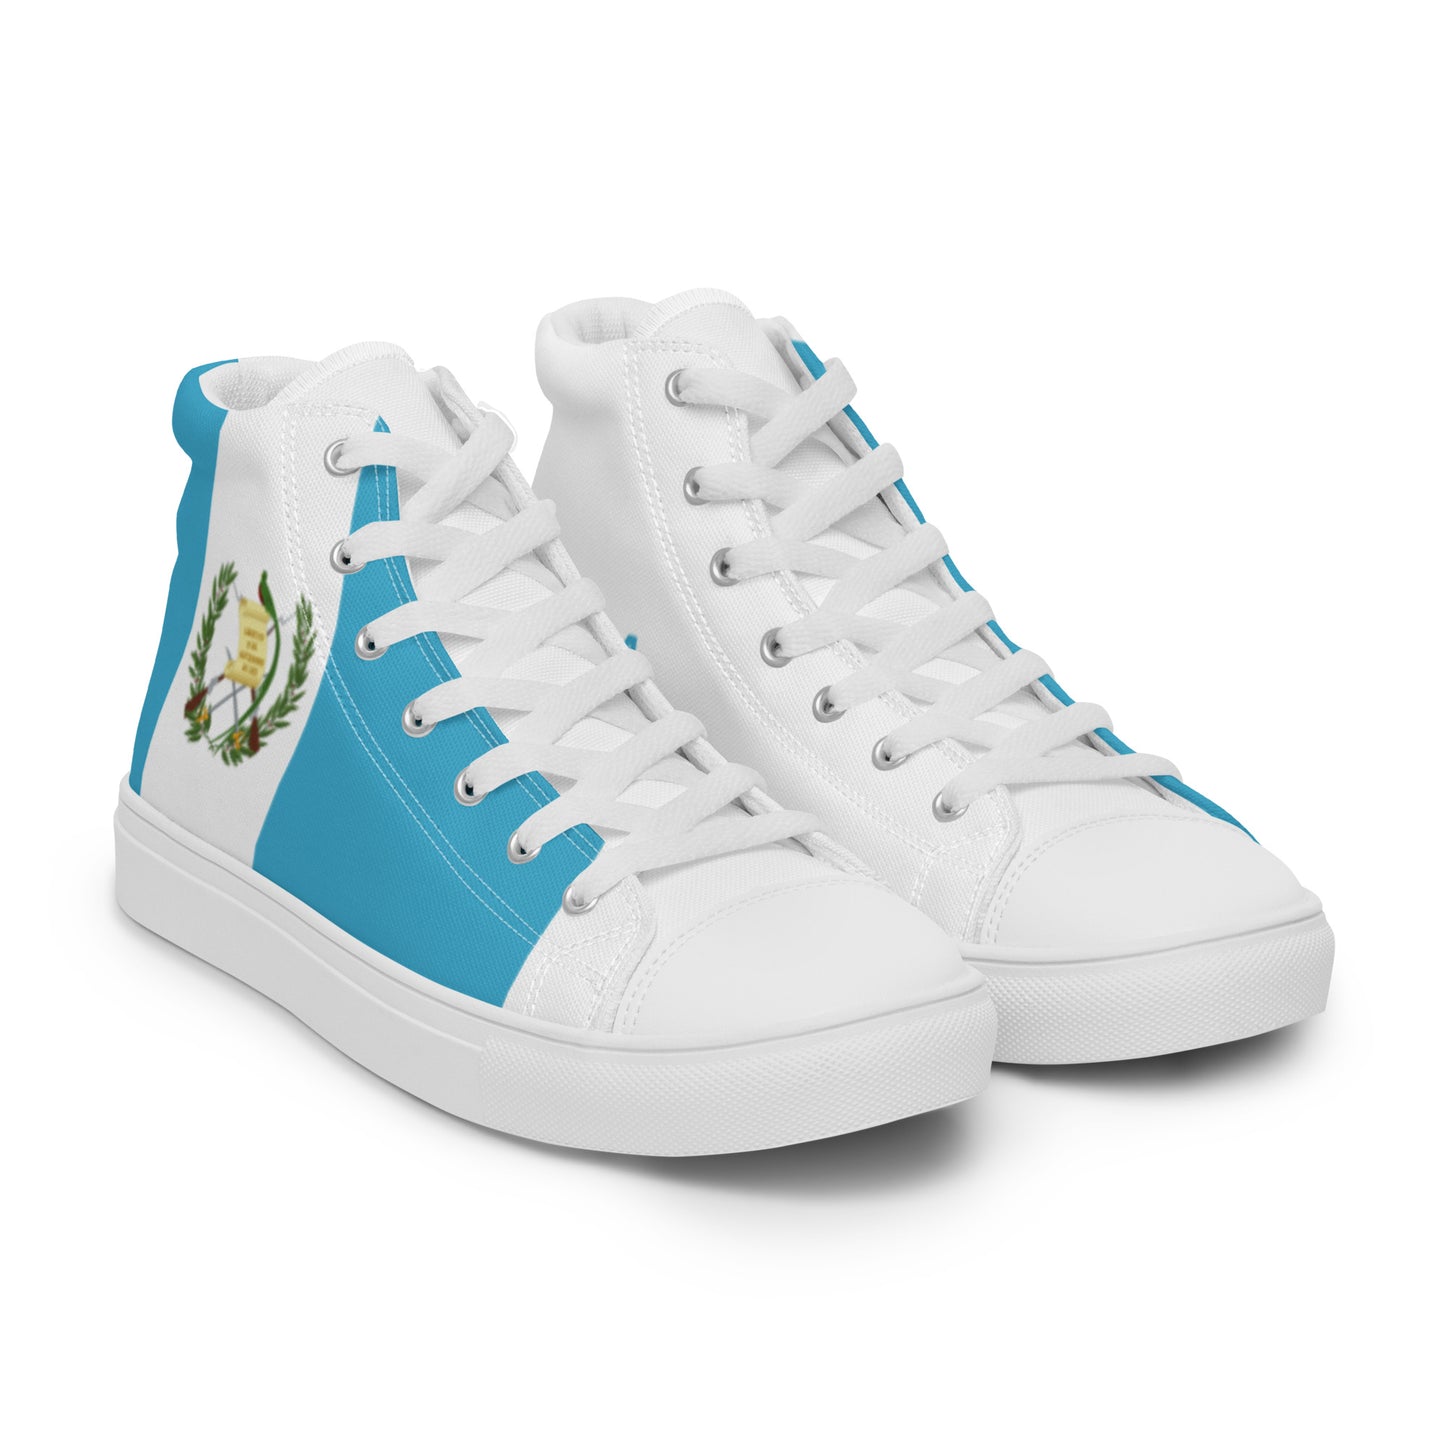 Guatemala - Men - Bandera - High top shoes